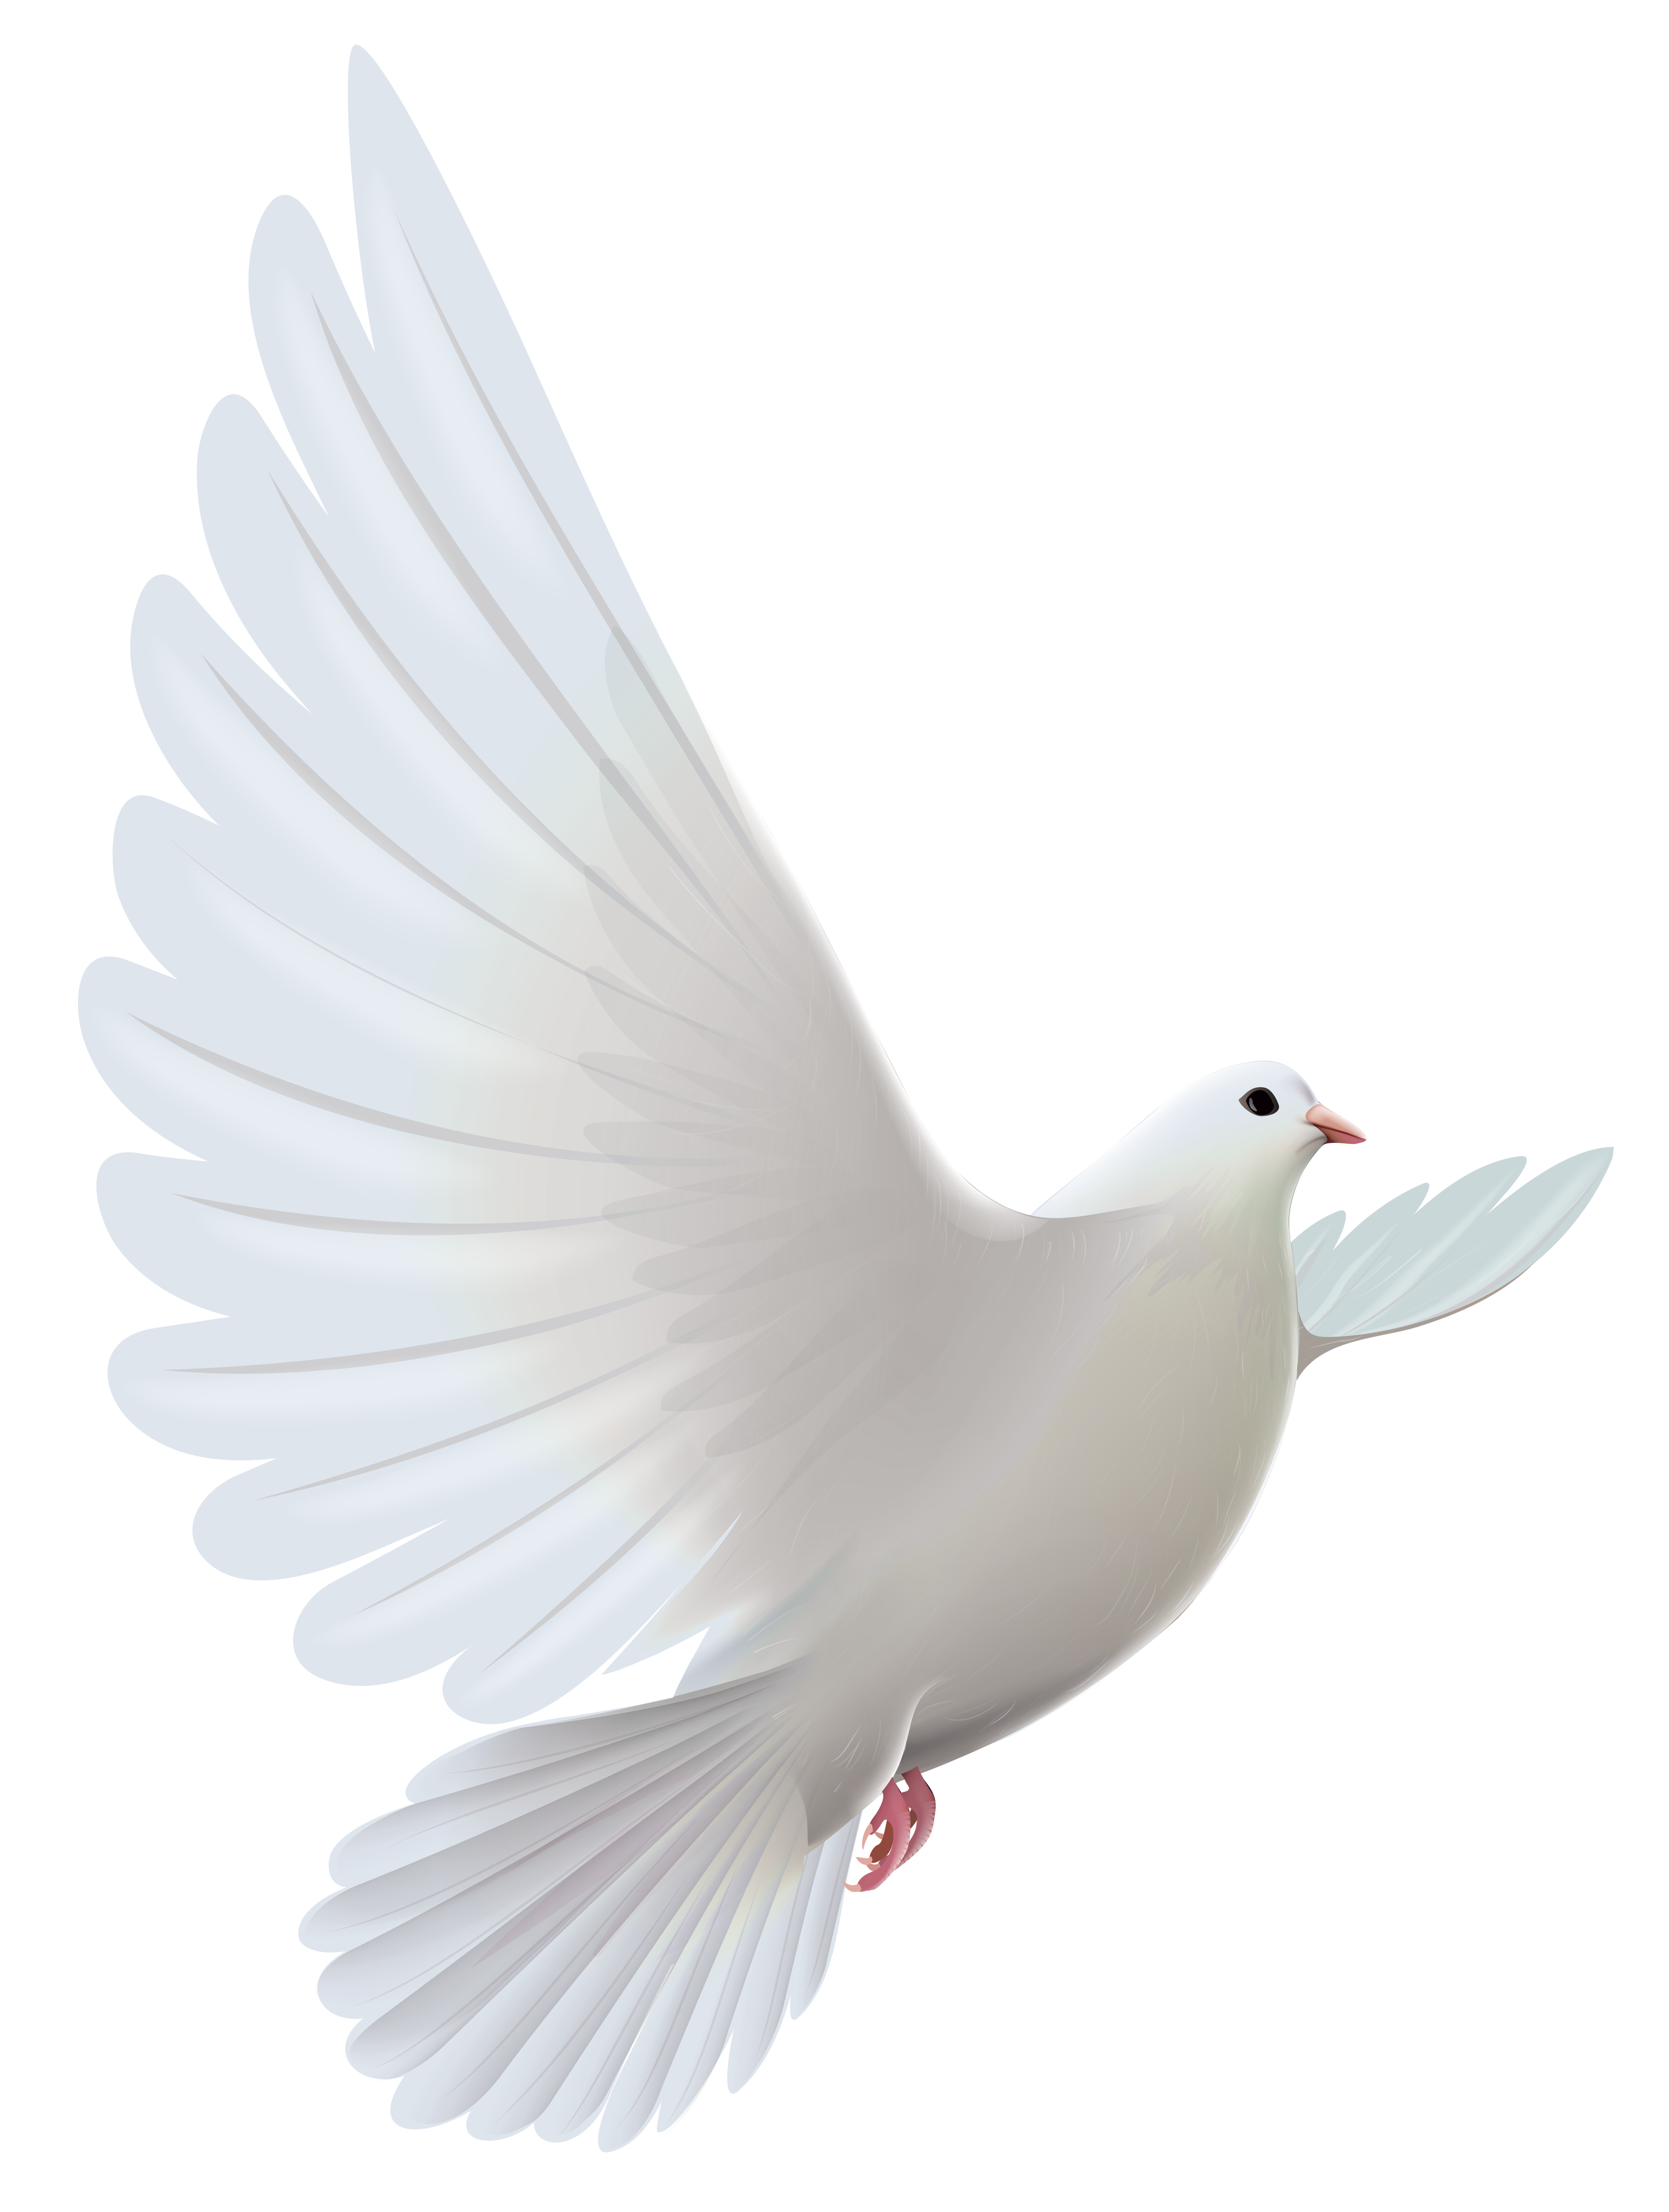 White Dove Transparent PNG Clipart